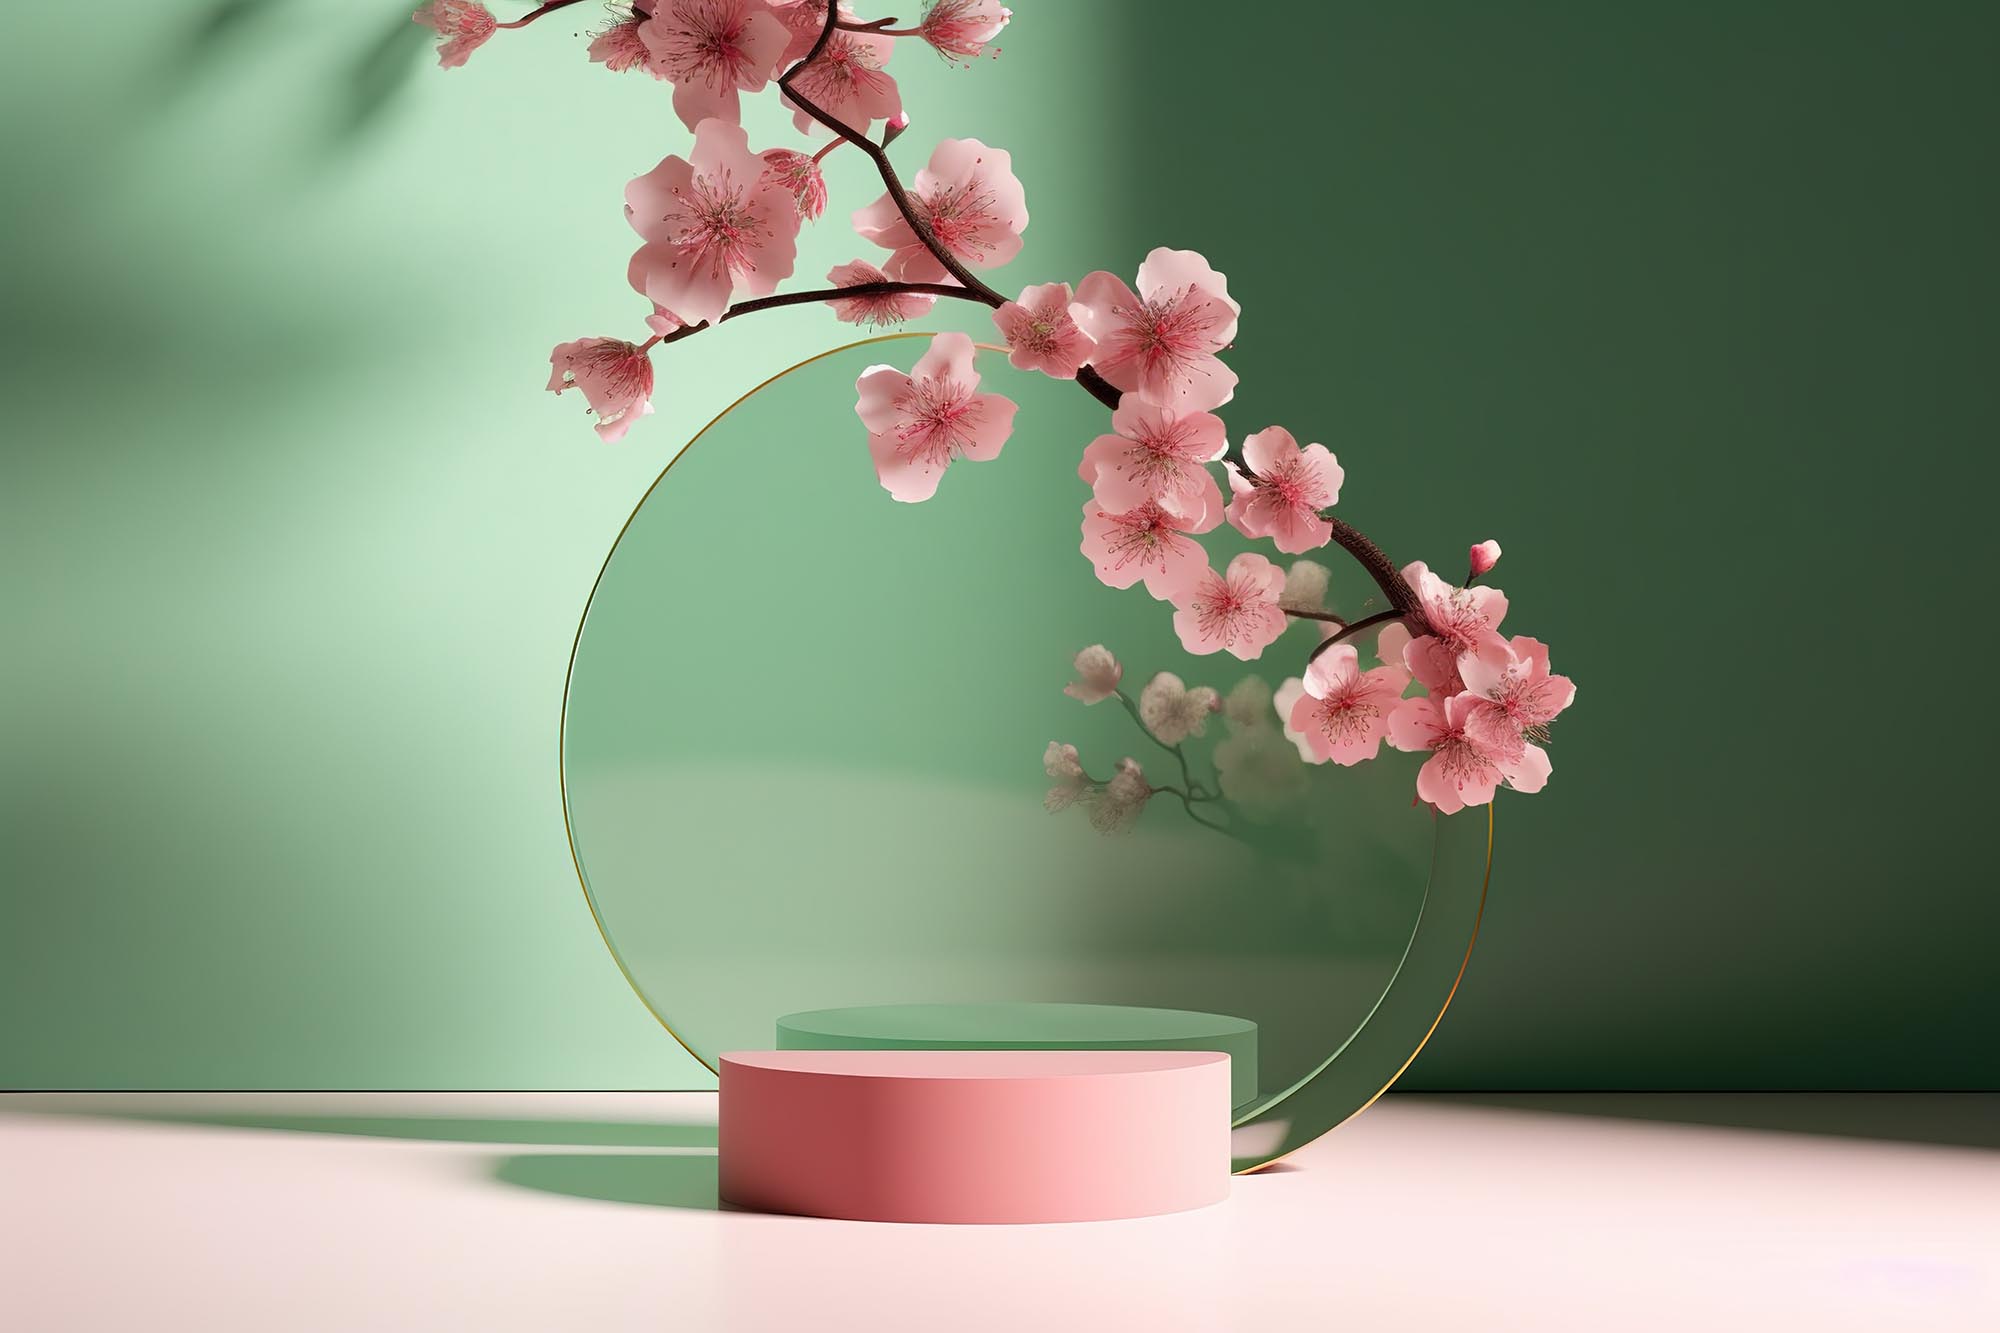 green podium round display sakura pink flower tree branch shadow